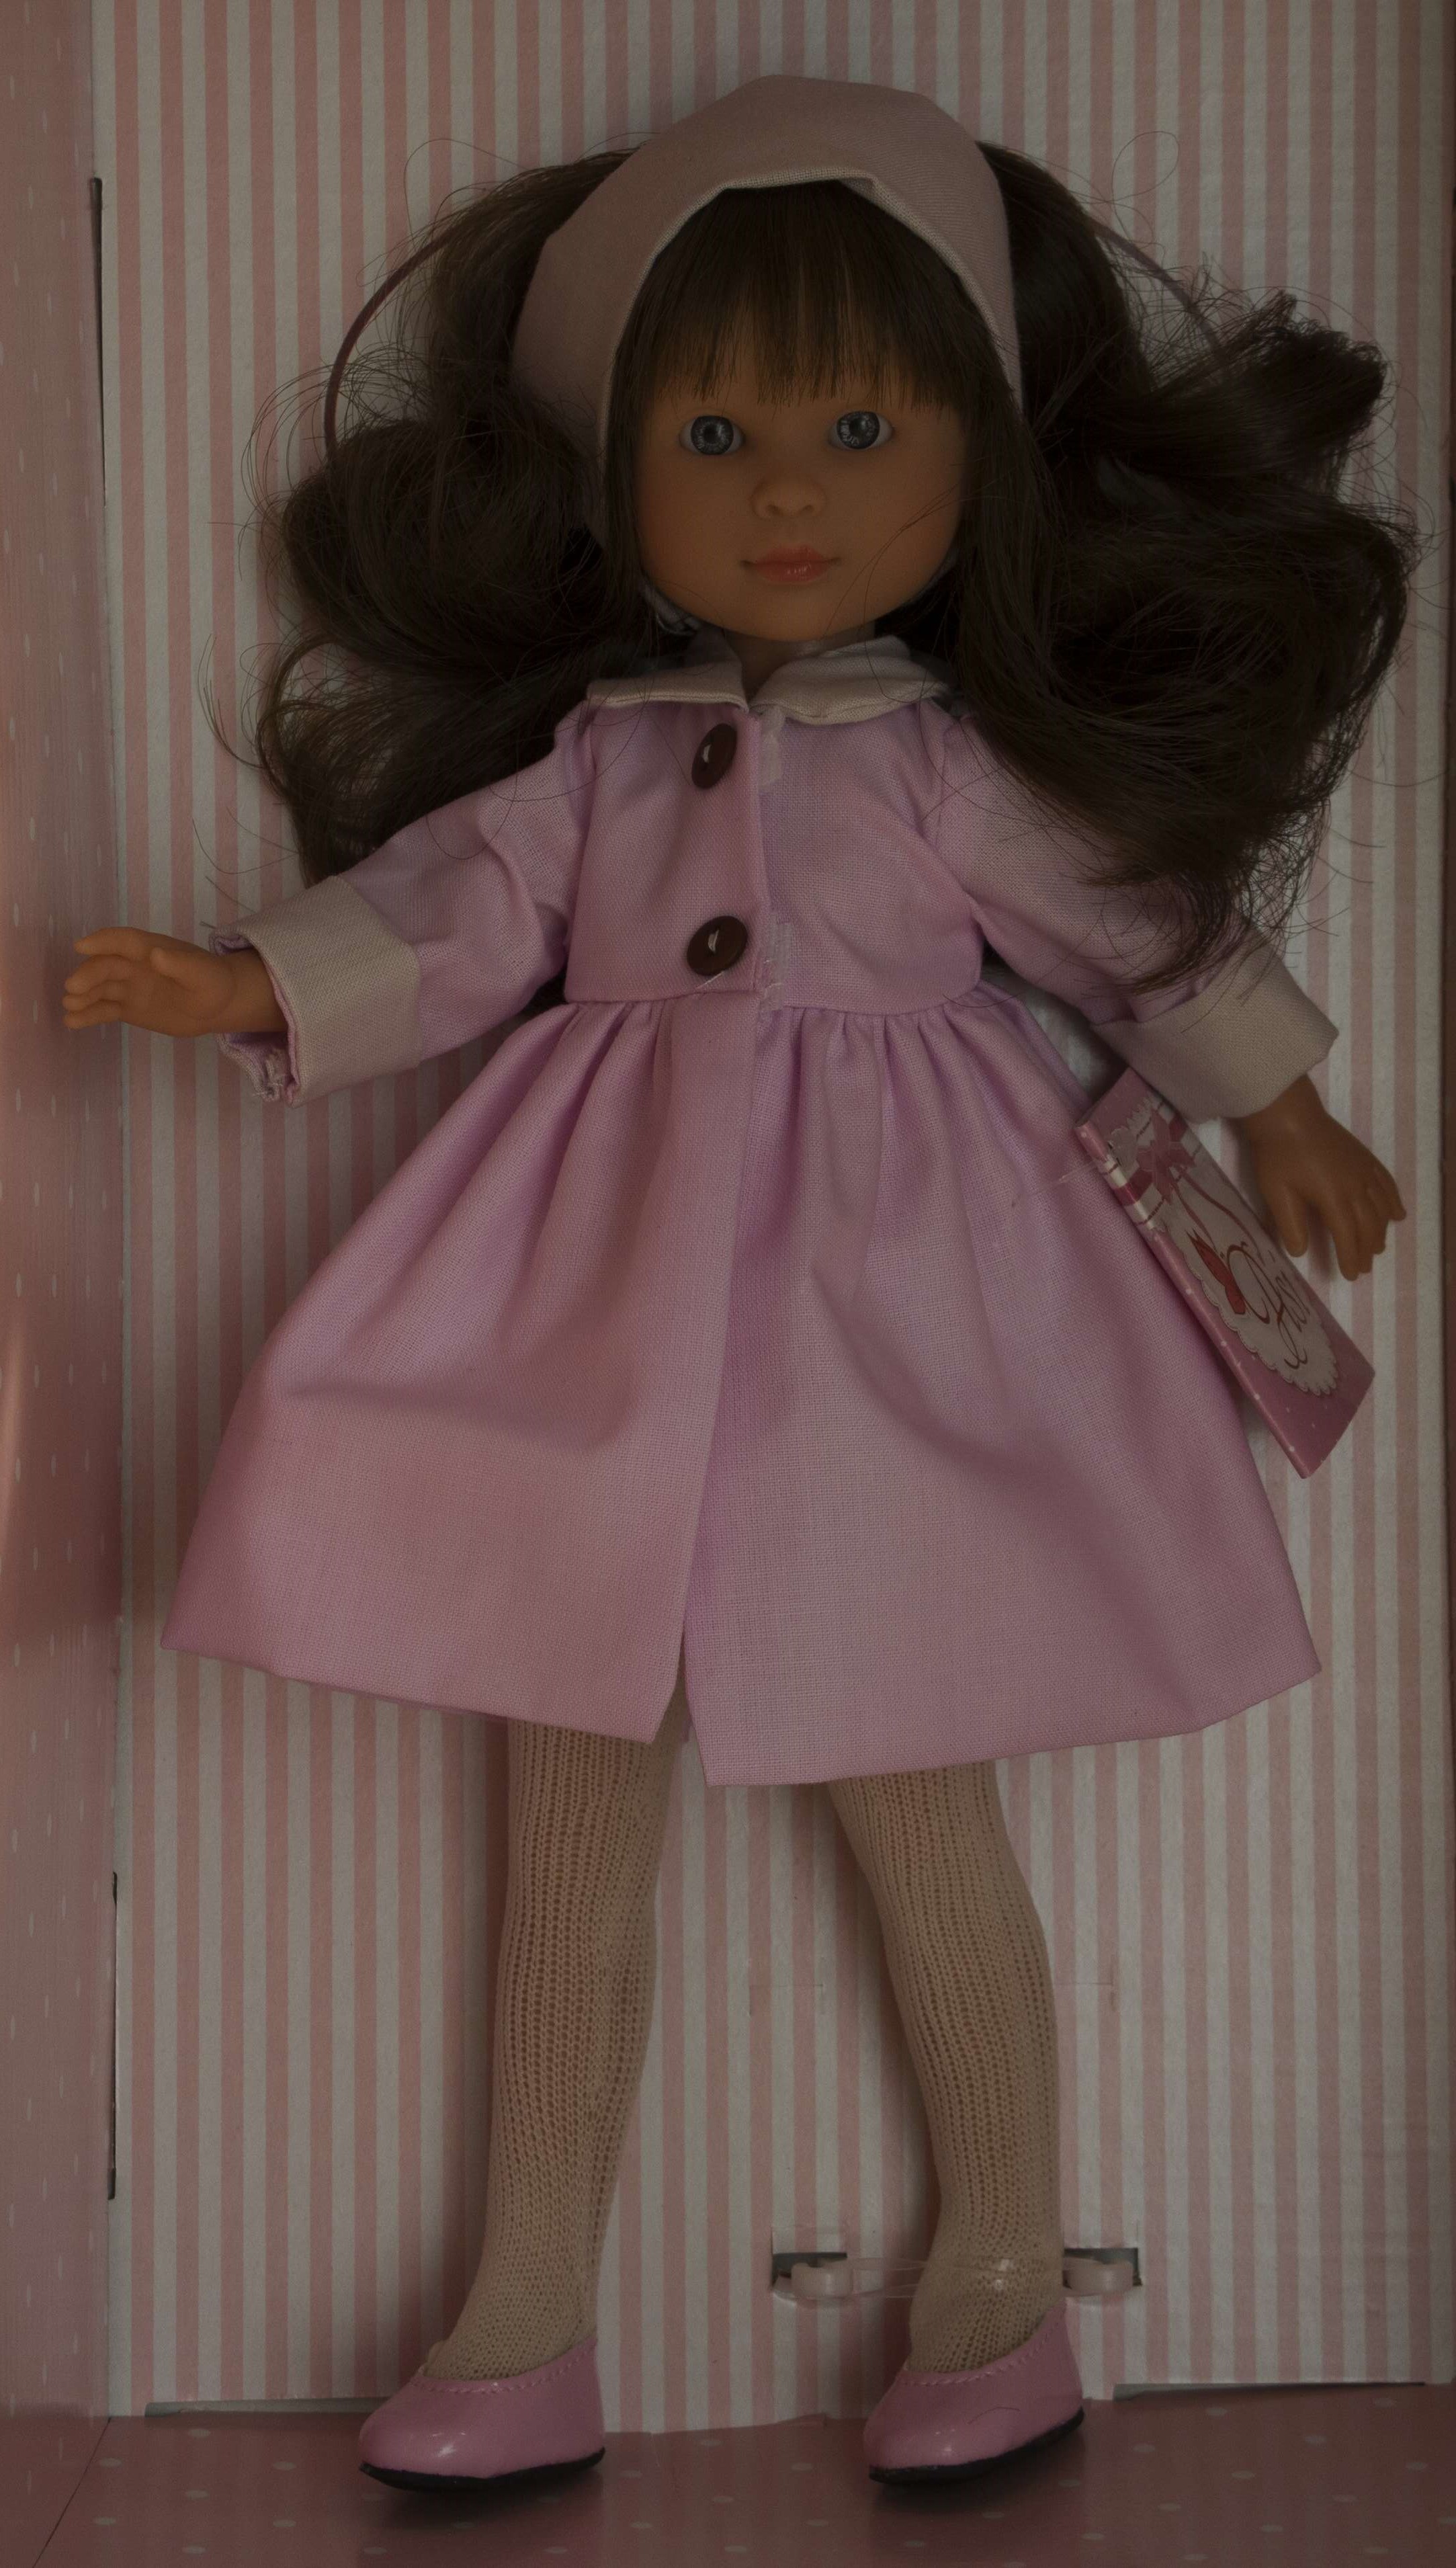 Realistická panenka CELIA - růžový kabátek - od firmy ASIVIL ze Španělska